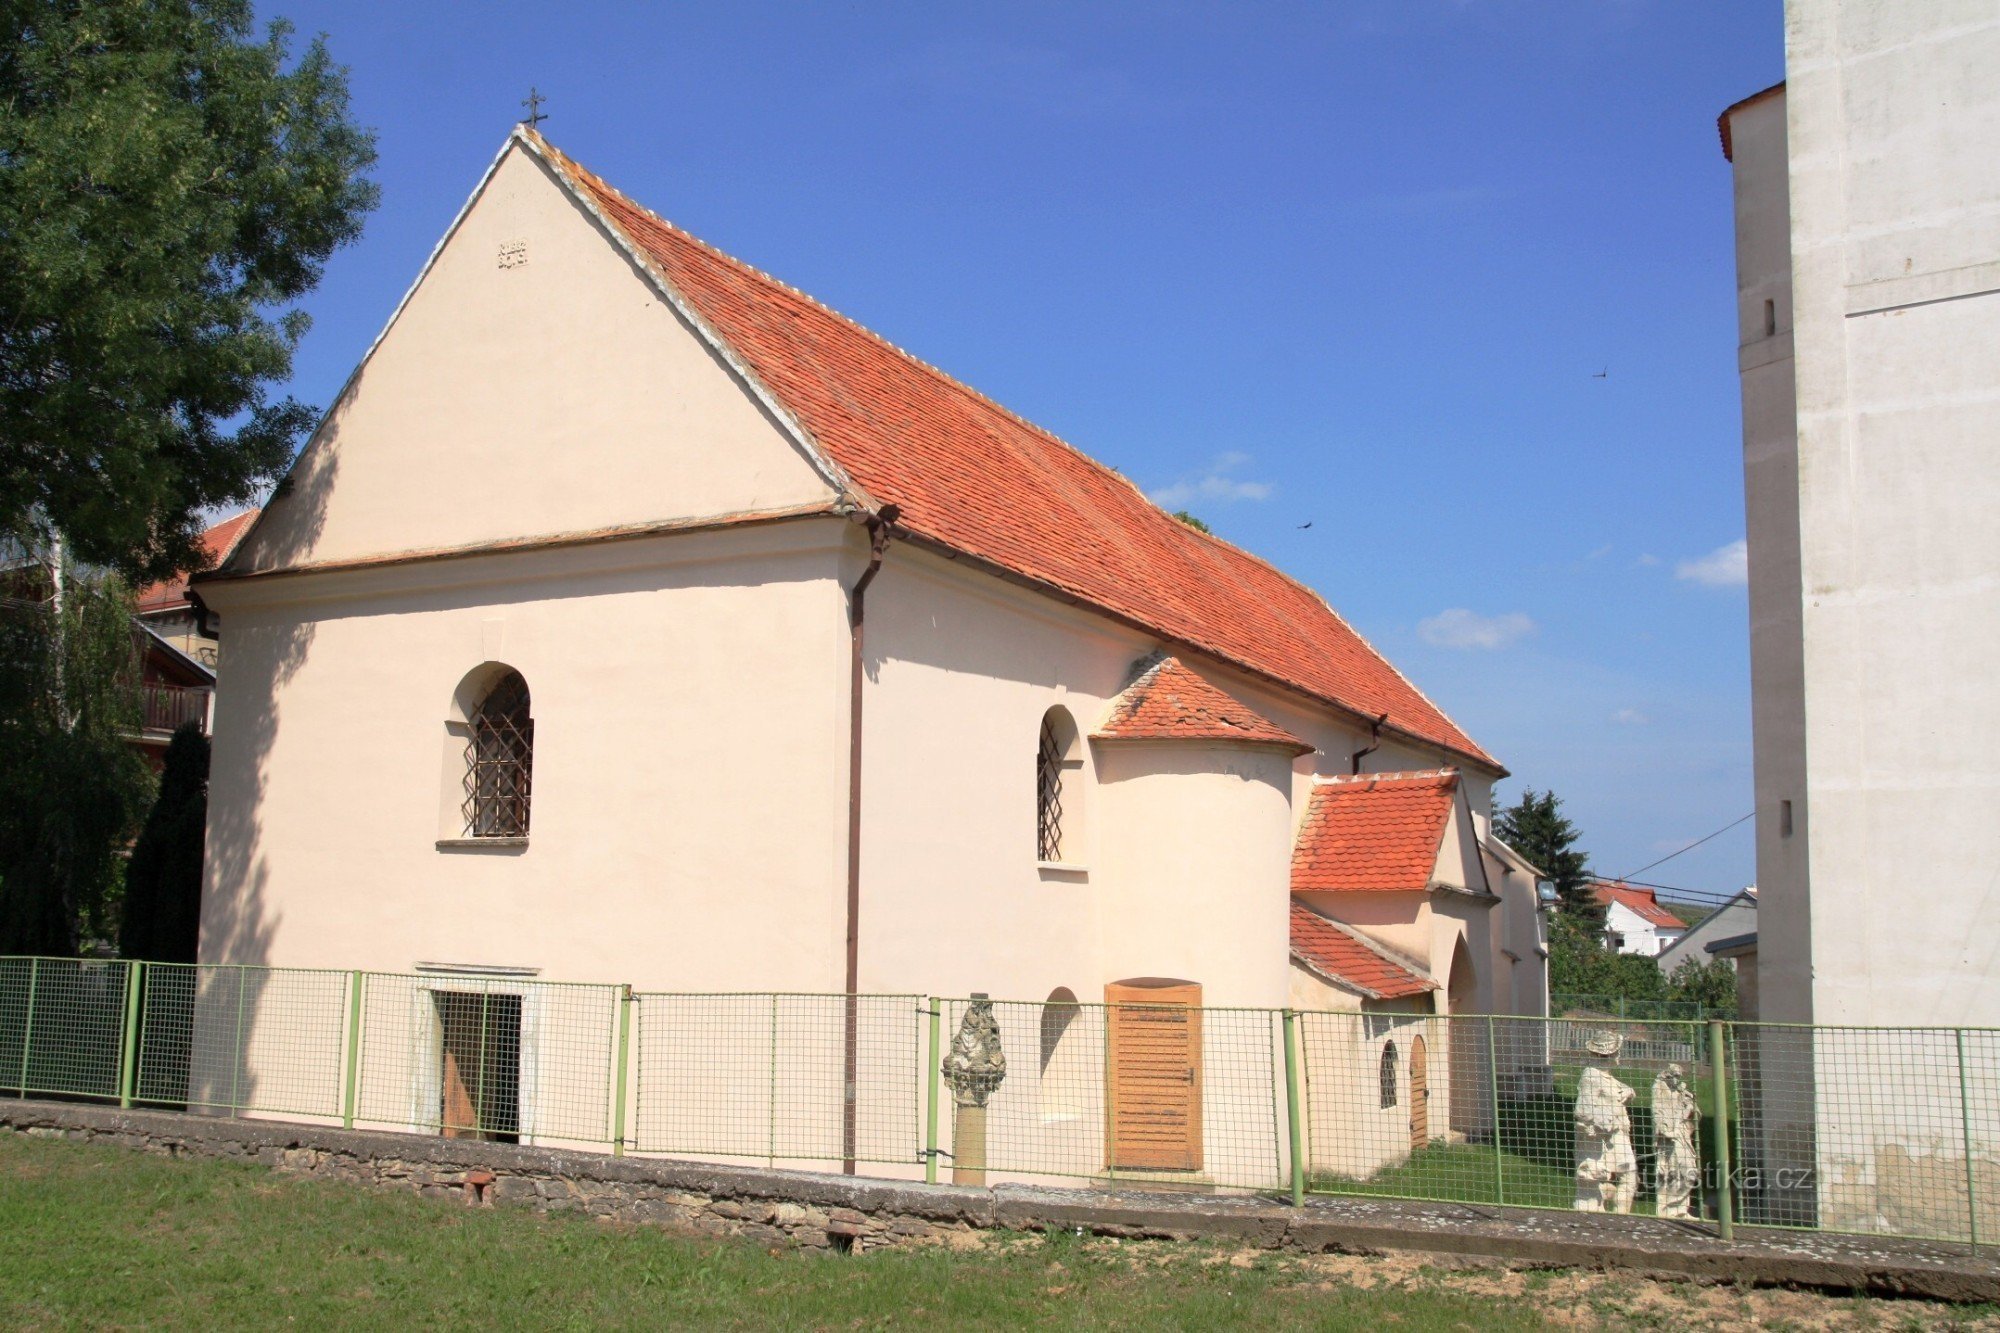 Přítluky - εκκλησία του Αγ. Αγορές από τα δυτικά